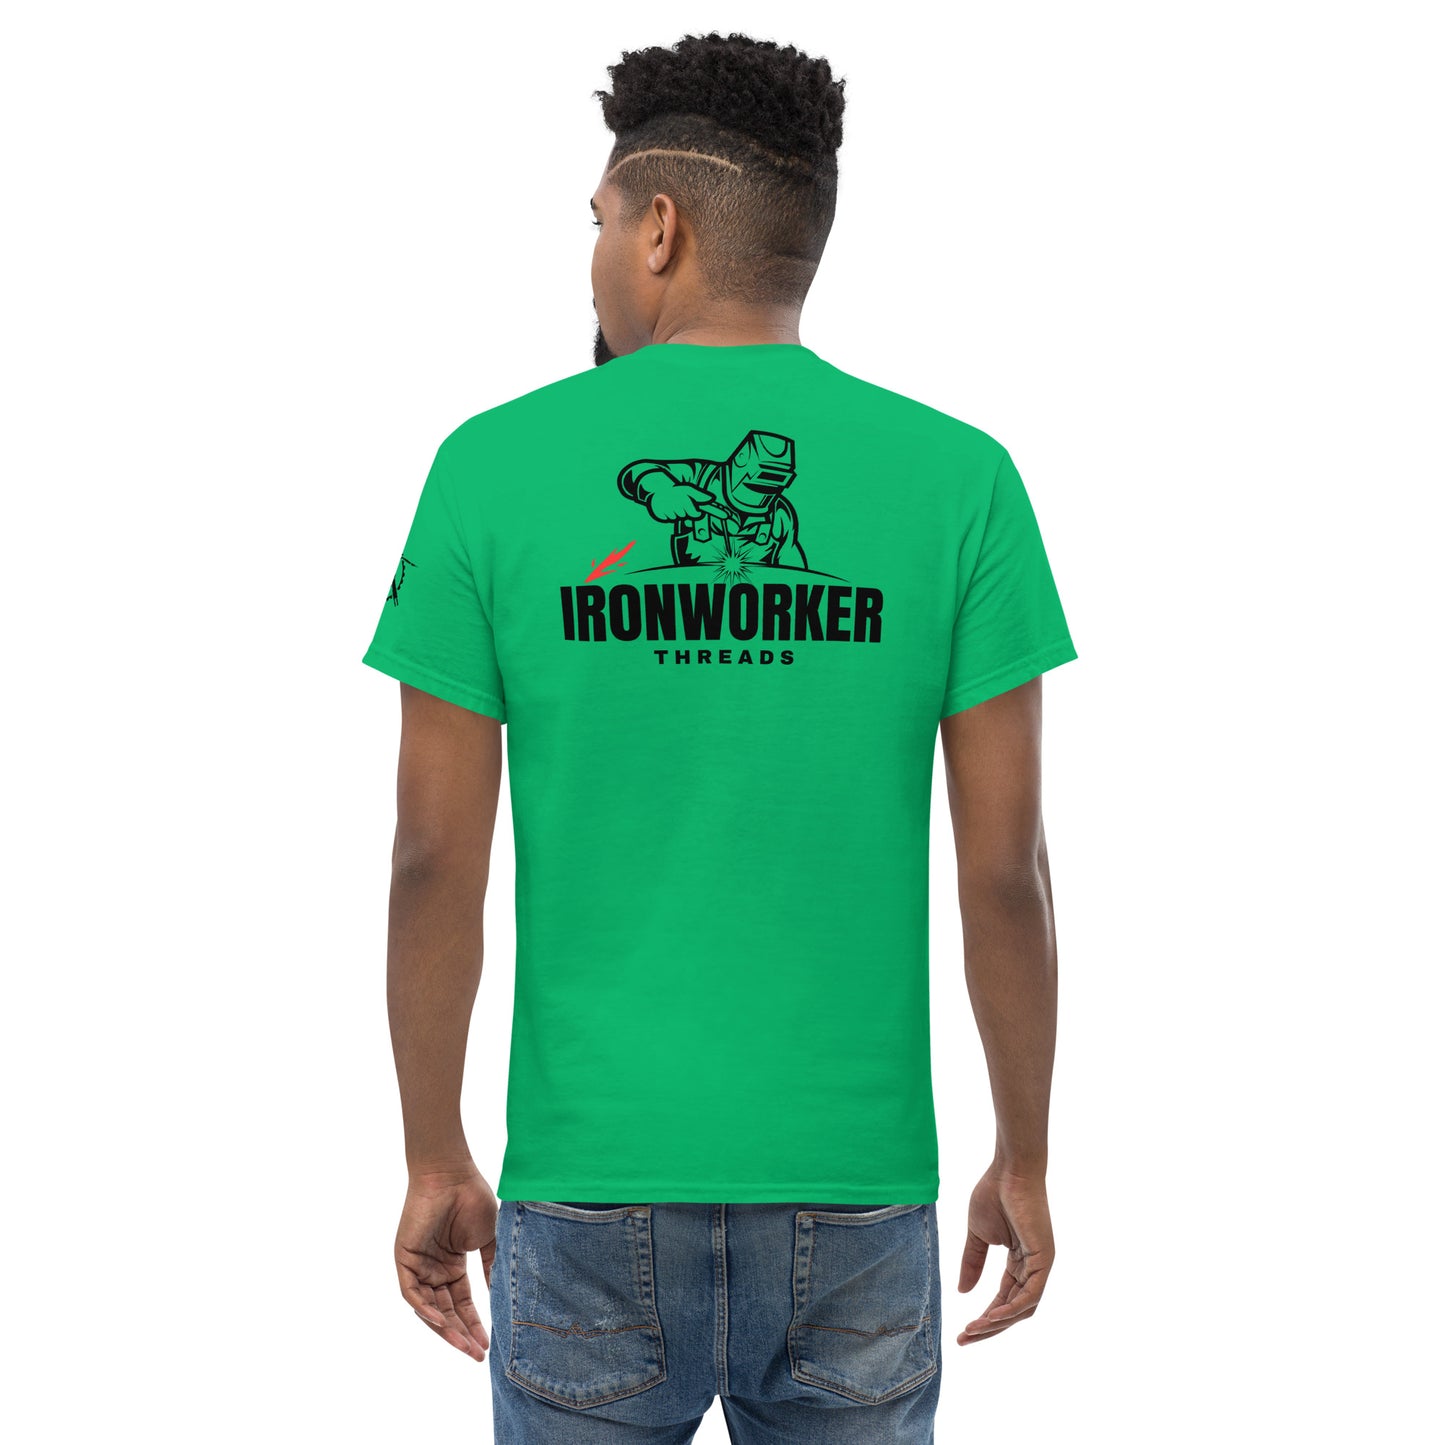 OG Ironworker Threads T-shirt